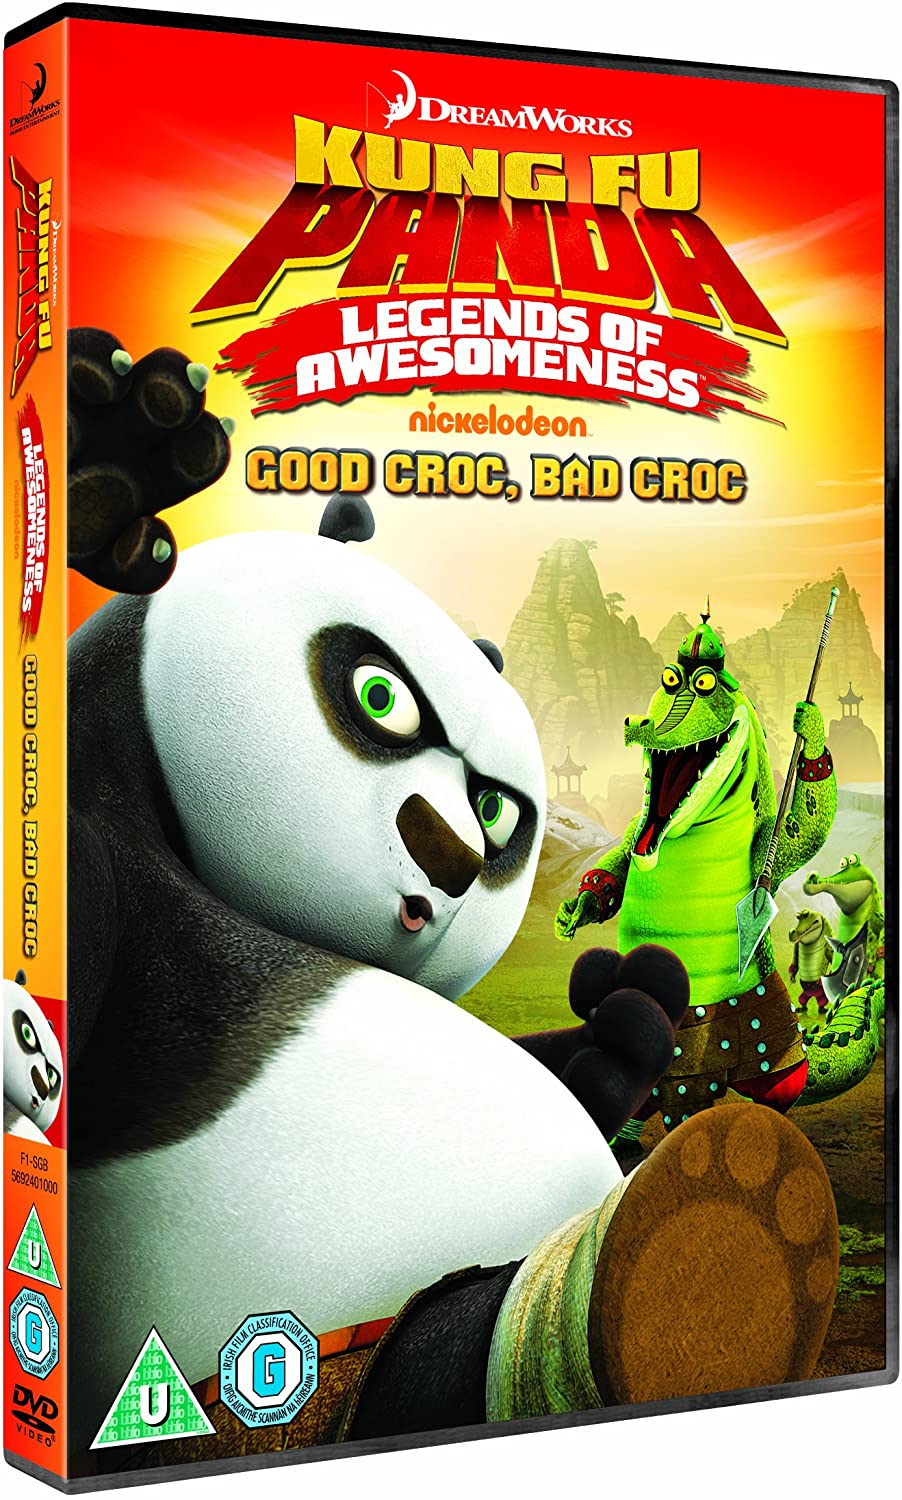 Kung Fu Panda: Good Croc, Bad Croc (Dreamworks) (DVD)